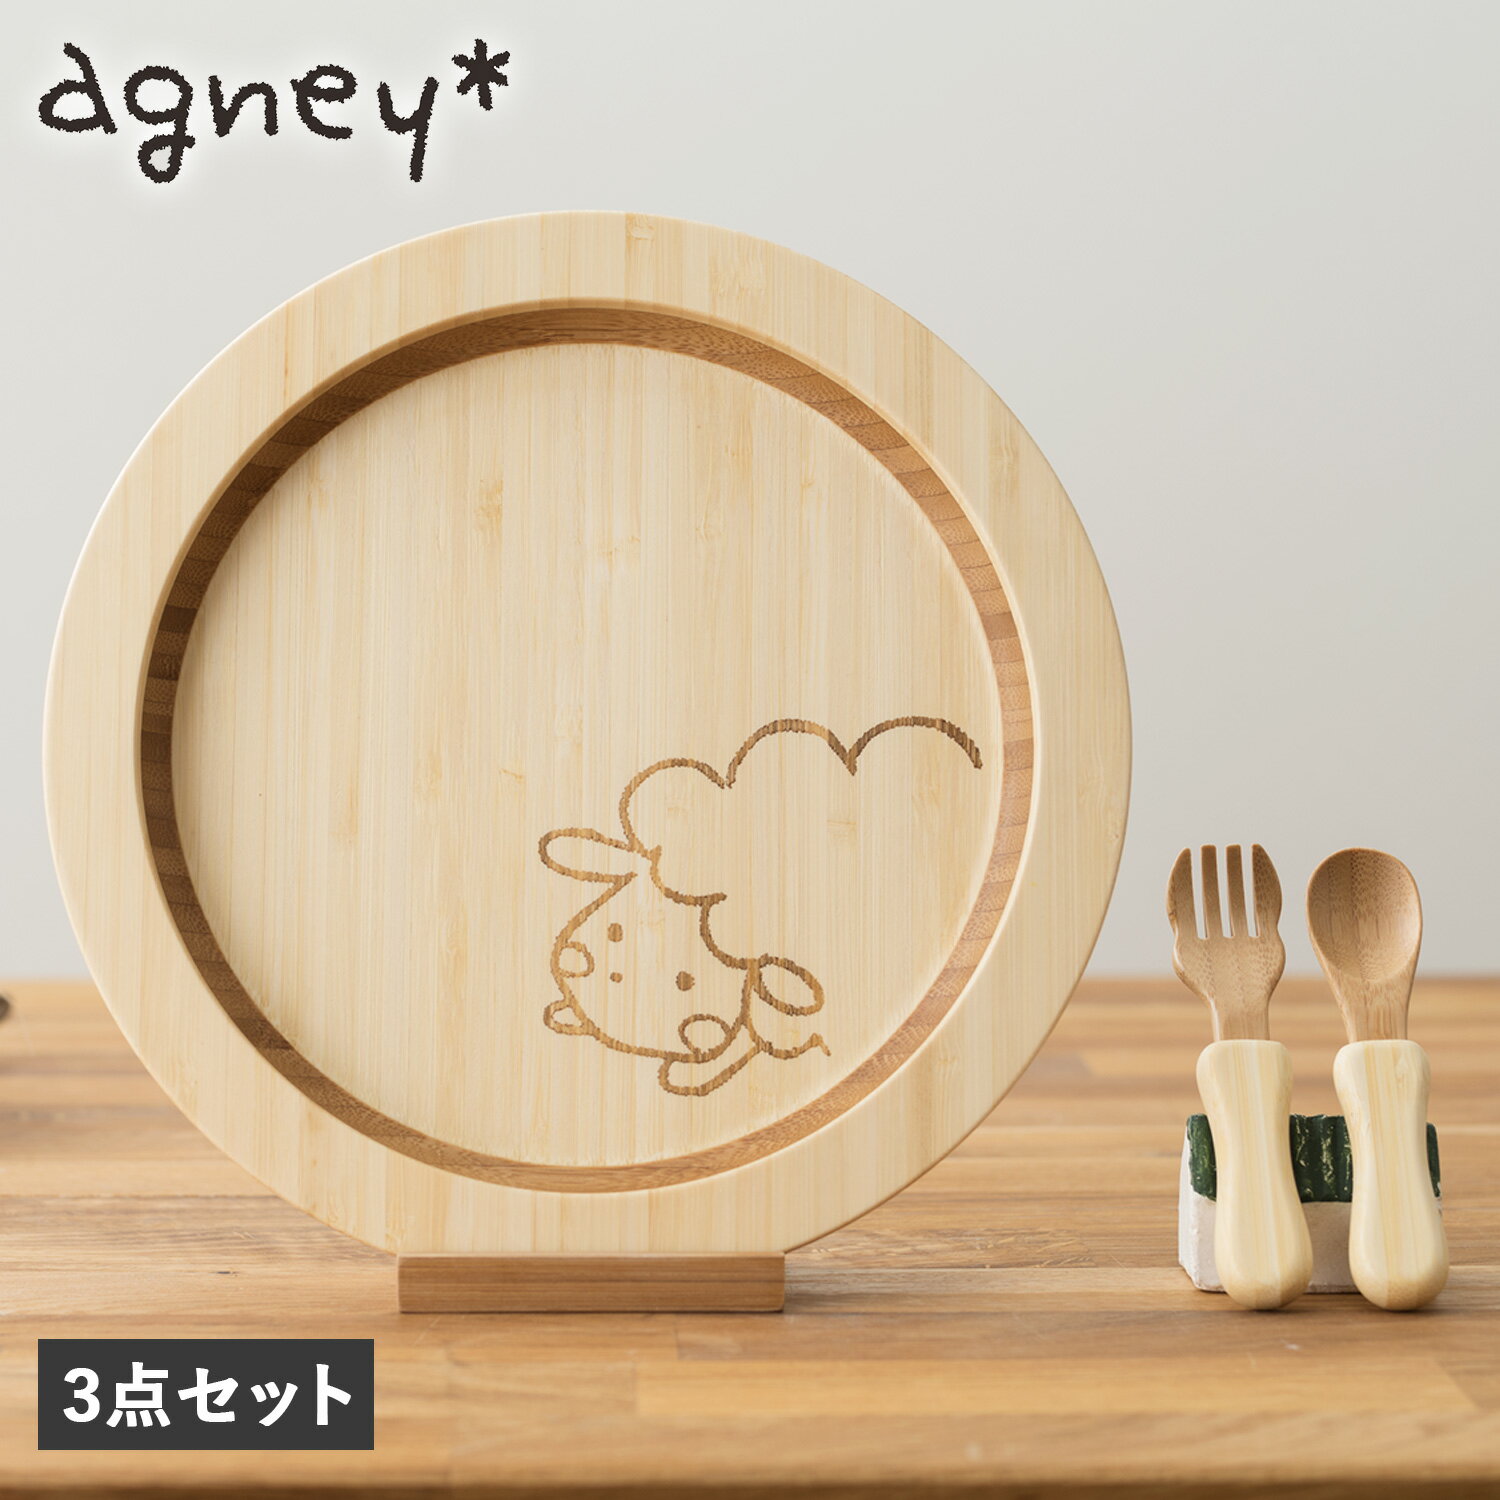 agney アグニー 子供 食器セット ワンプレート はねプレート 3点セット 男の子 女の子 ベビー 赤ちゃん 天然素材 日本製 食洗器対応 AG-124HSS